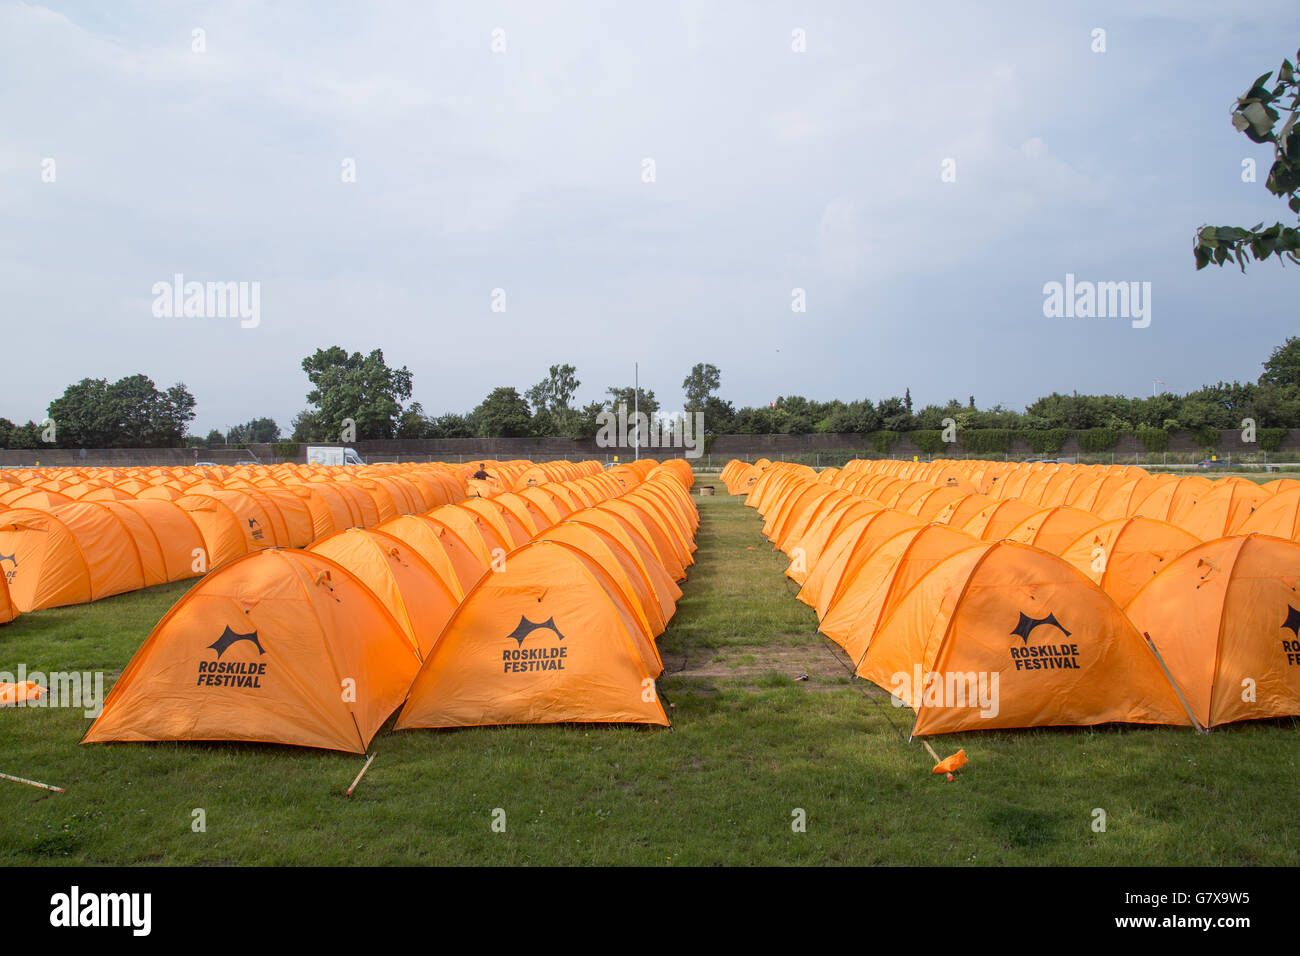 Roskilde, Danemark - 25 juin 2016 : Des rangées de tentes orange au Roskilde Festival 2016 Banque D'Images